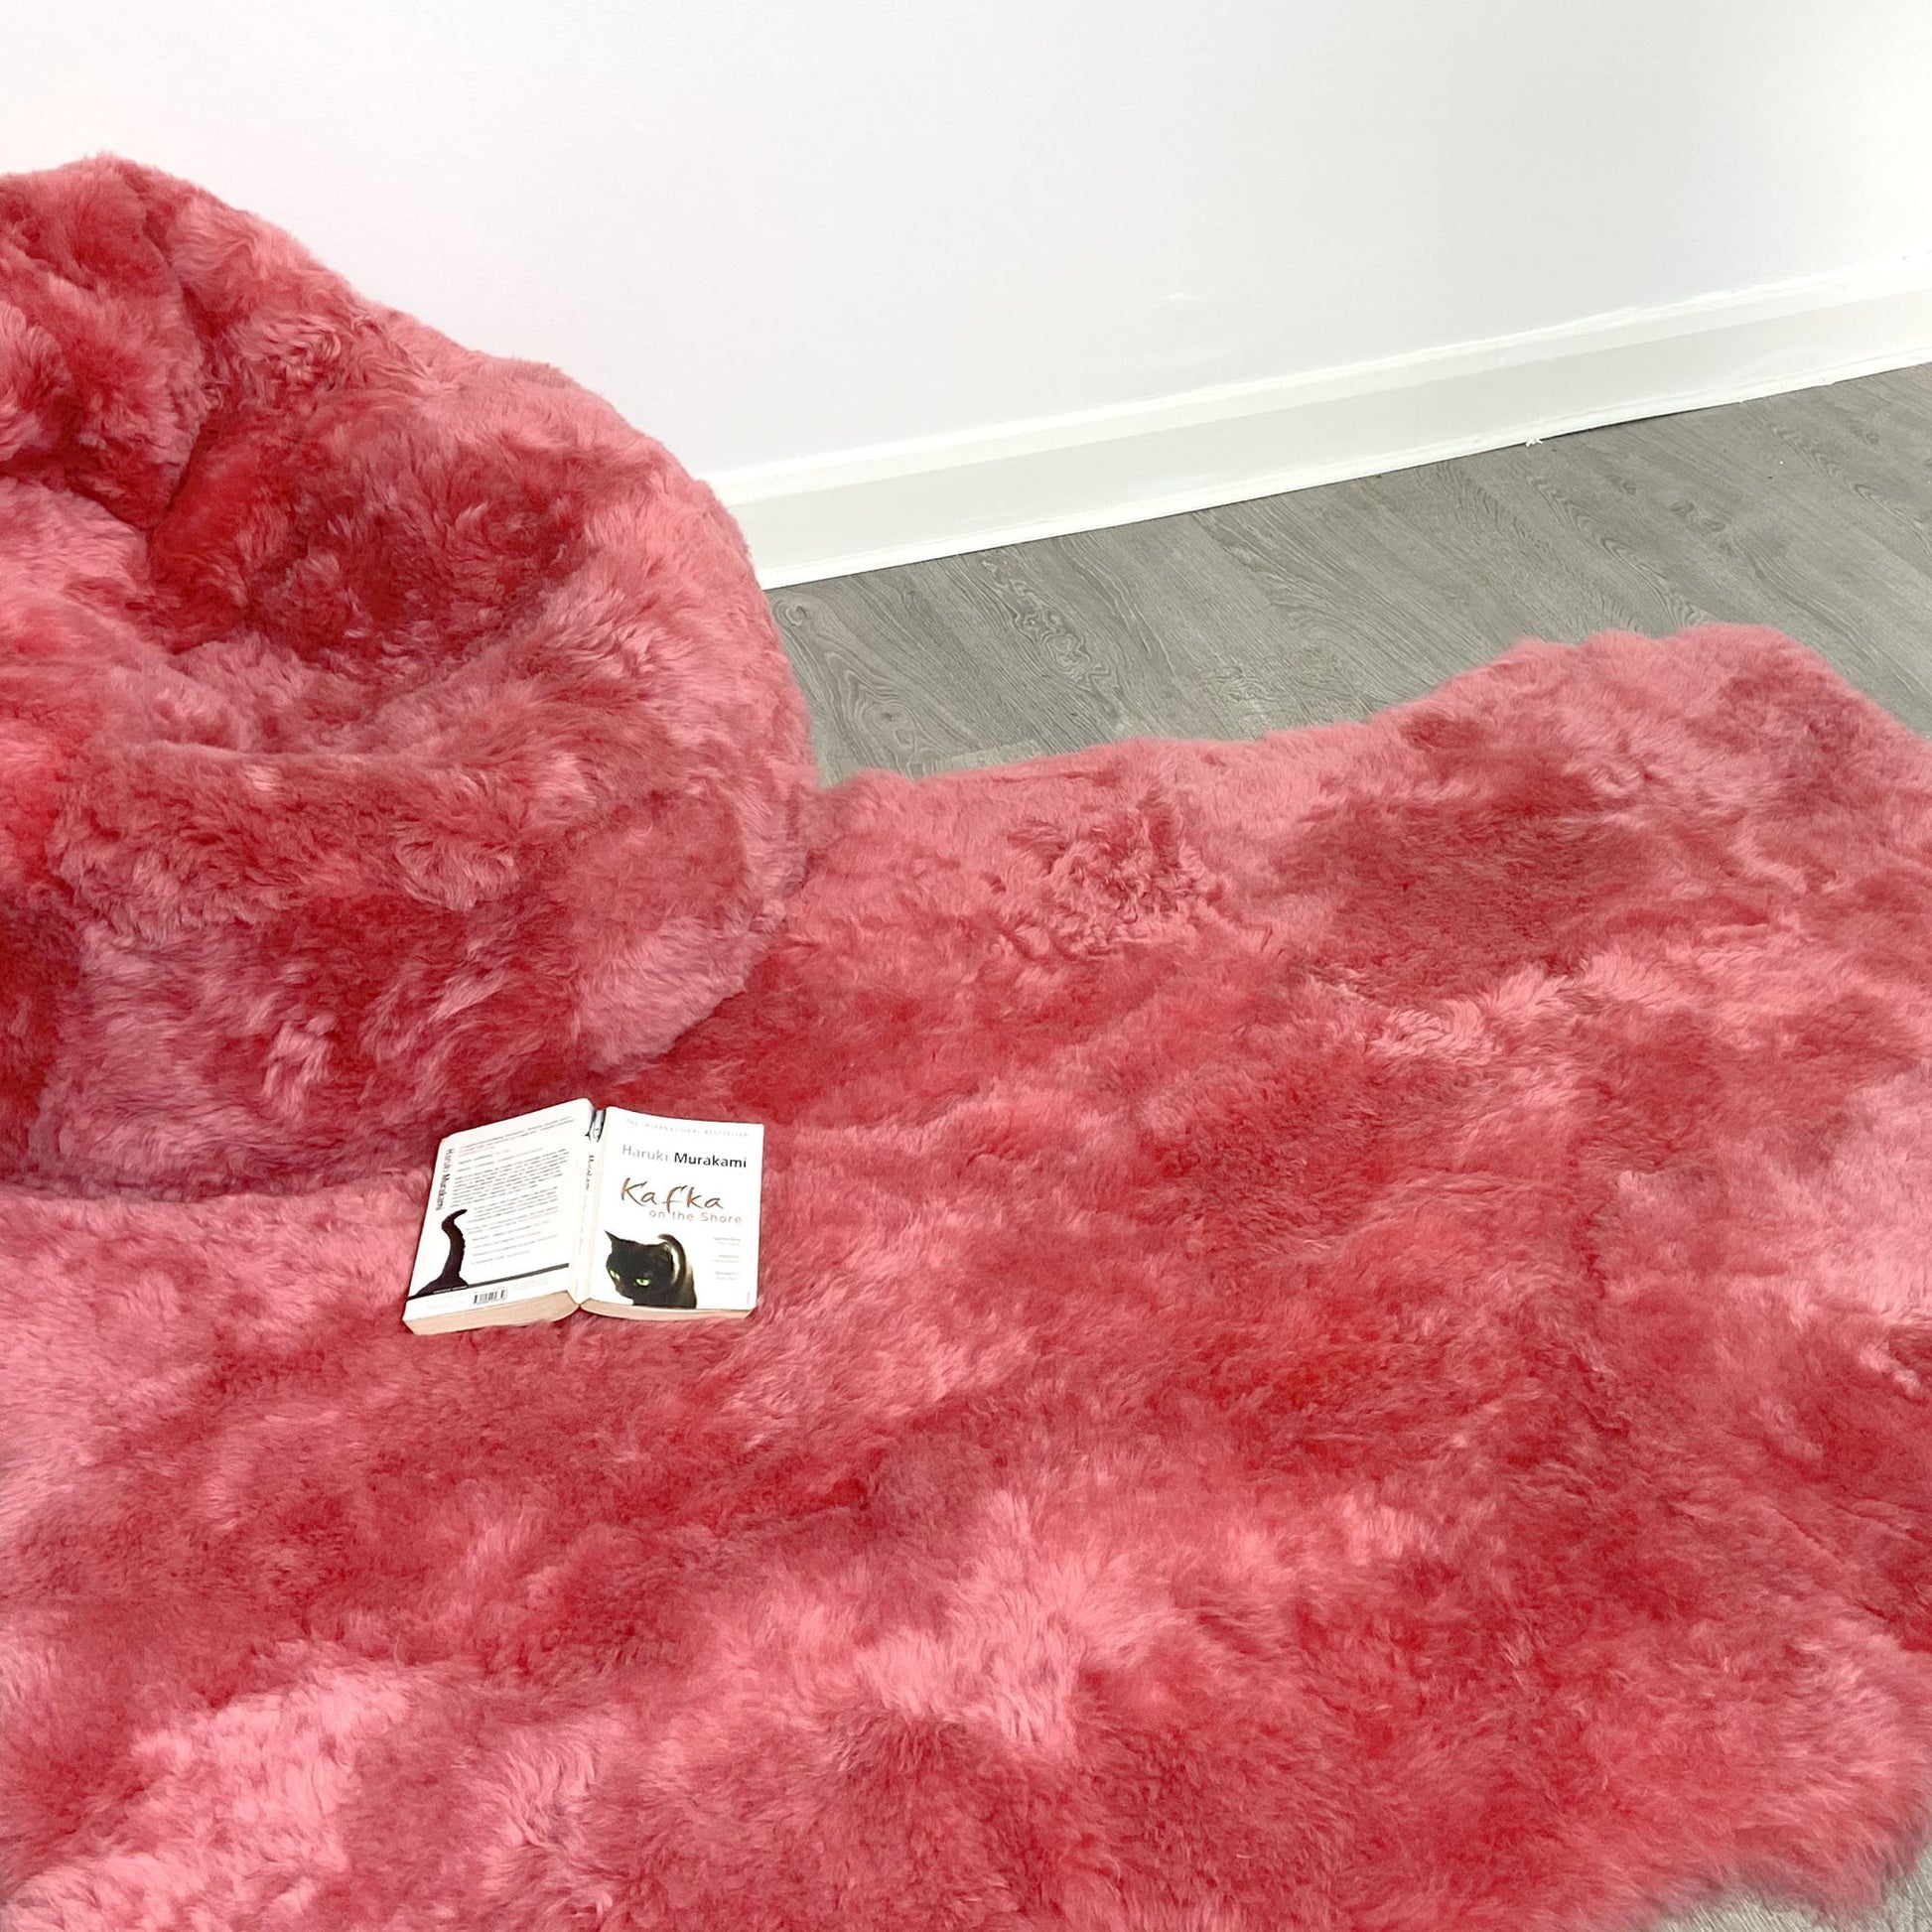 Icelandic Shorn Sheepskin Beanbag & Throw Set - Coral Pink Natural Edges Rectangular Stunning Soft Rug and Bean bag - Wildash London